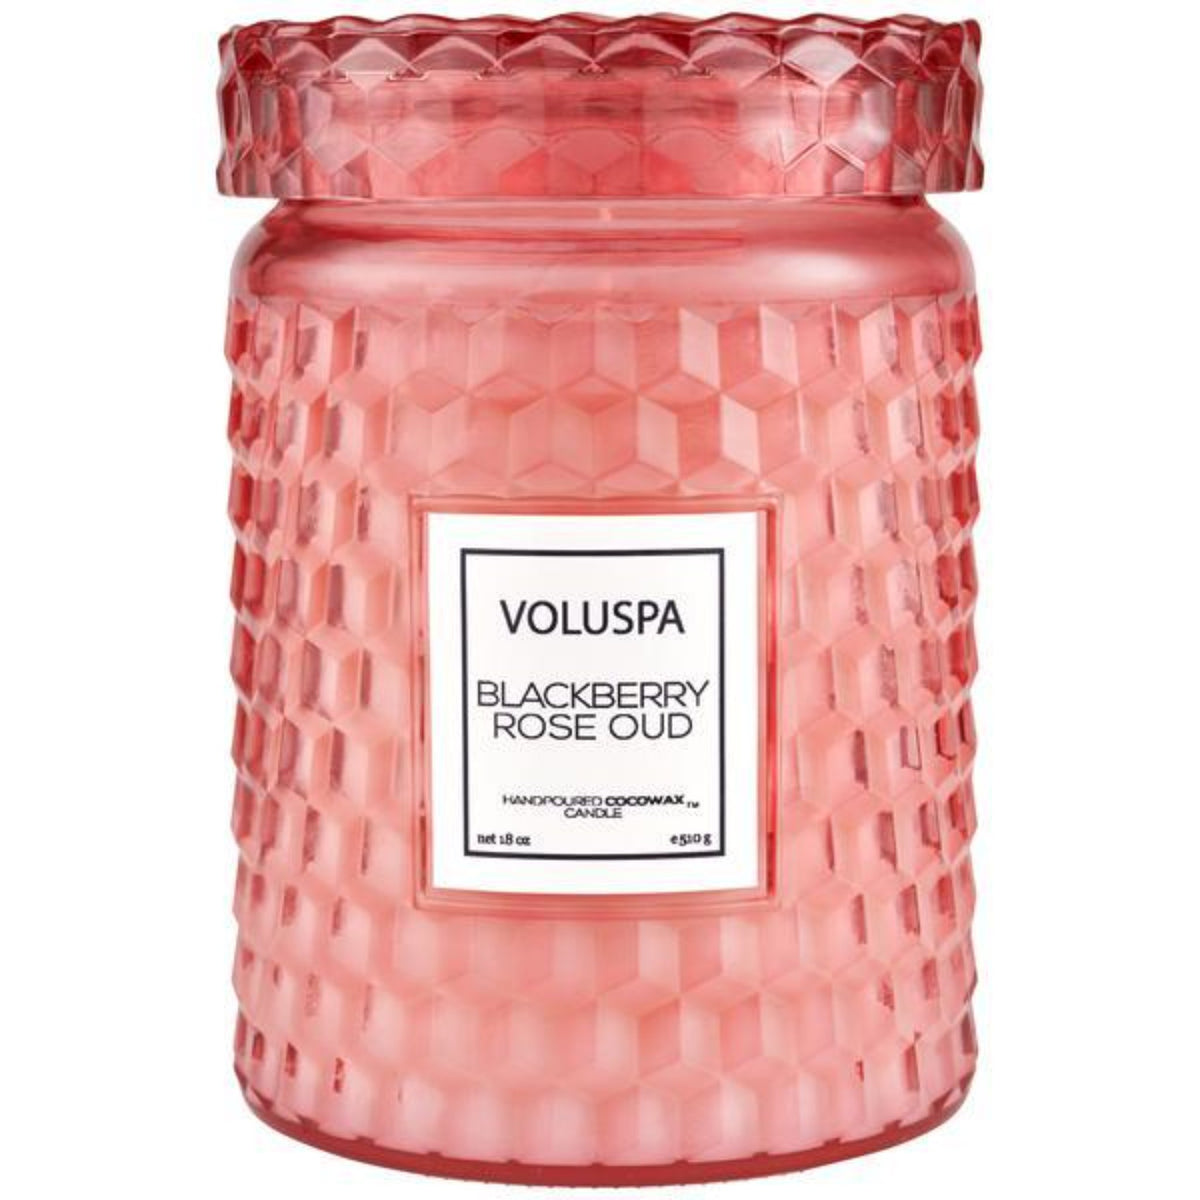 Voluspa: Blackberry Rose Oud Large Jar Candle